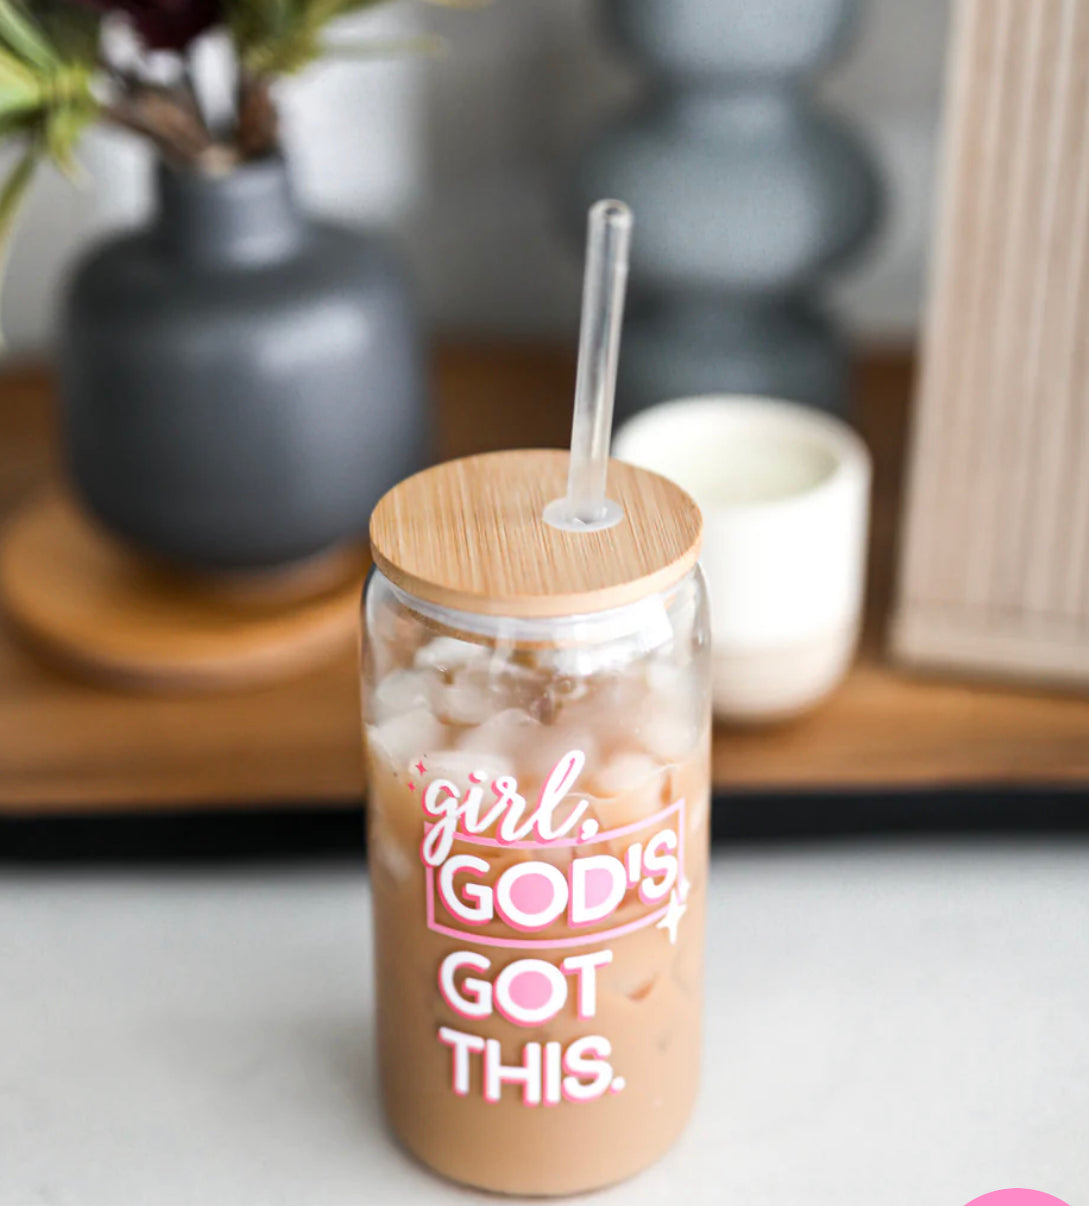 "GIRL GOD'S GOT THIS" ICED COFFEE TUMBLER